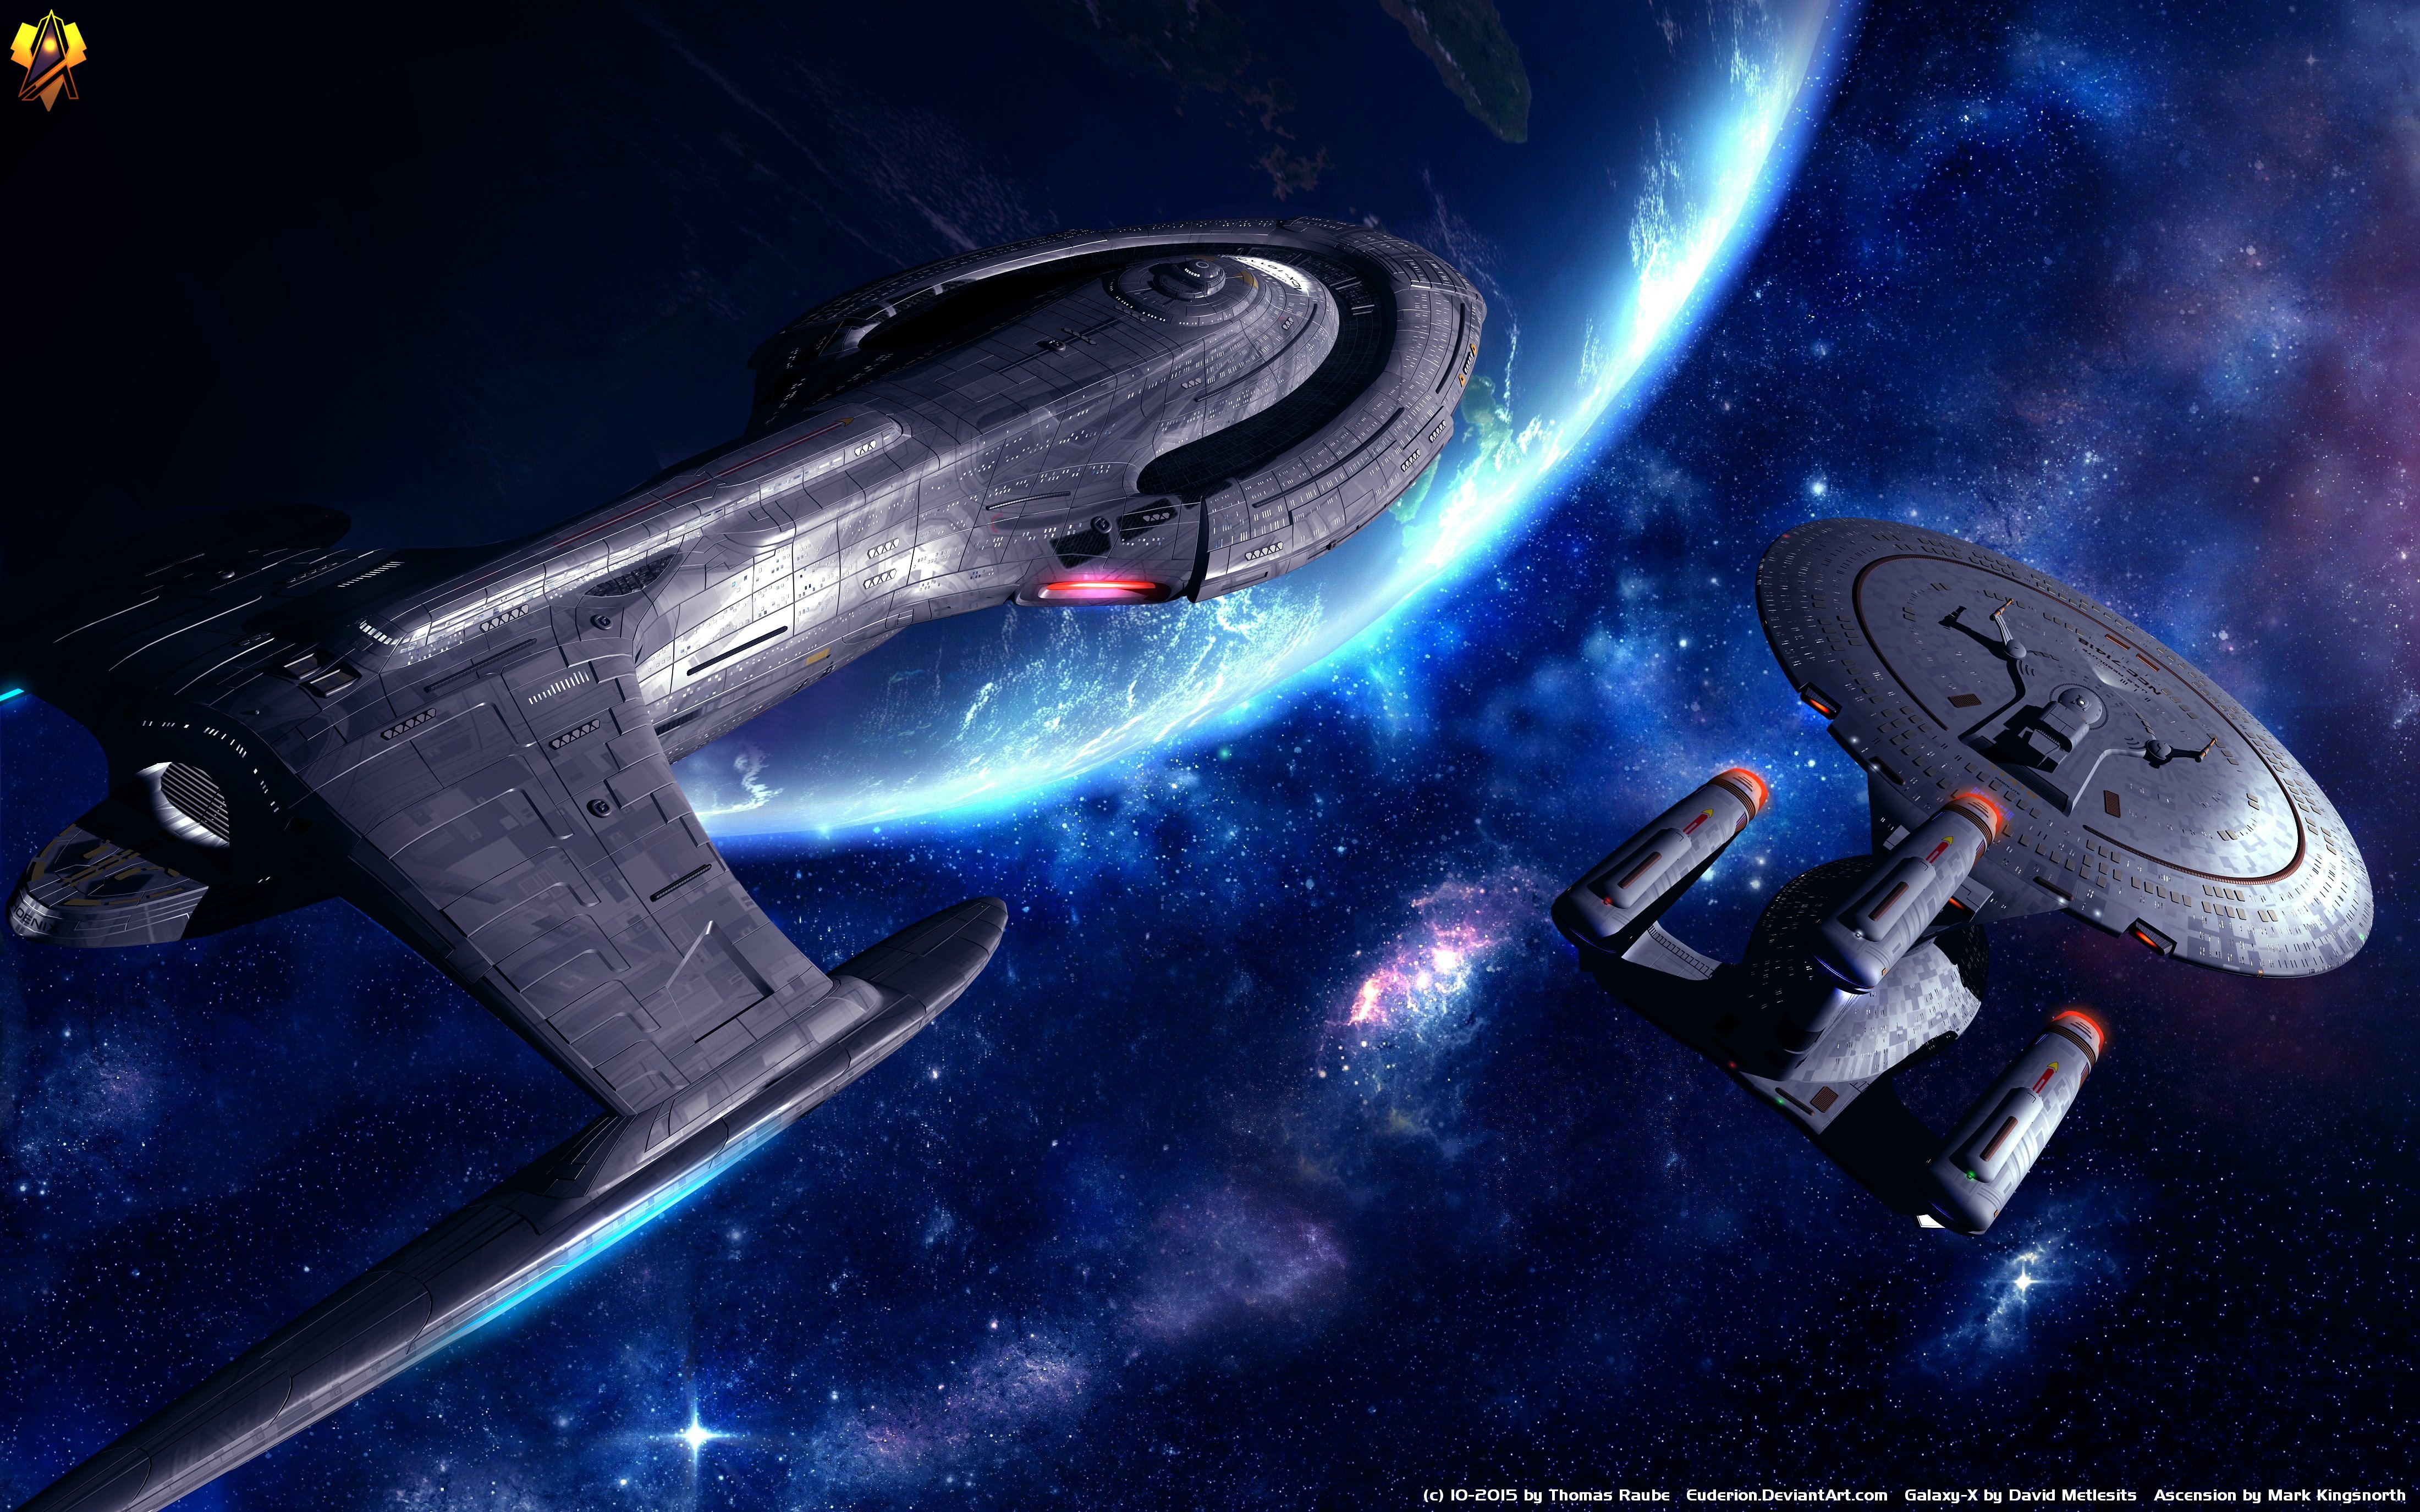 enterprise (star trek), tv show, star trek: the next generation, galaxy class, star trek, uss phoenix